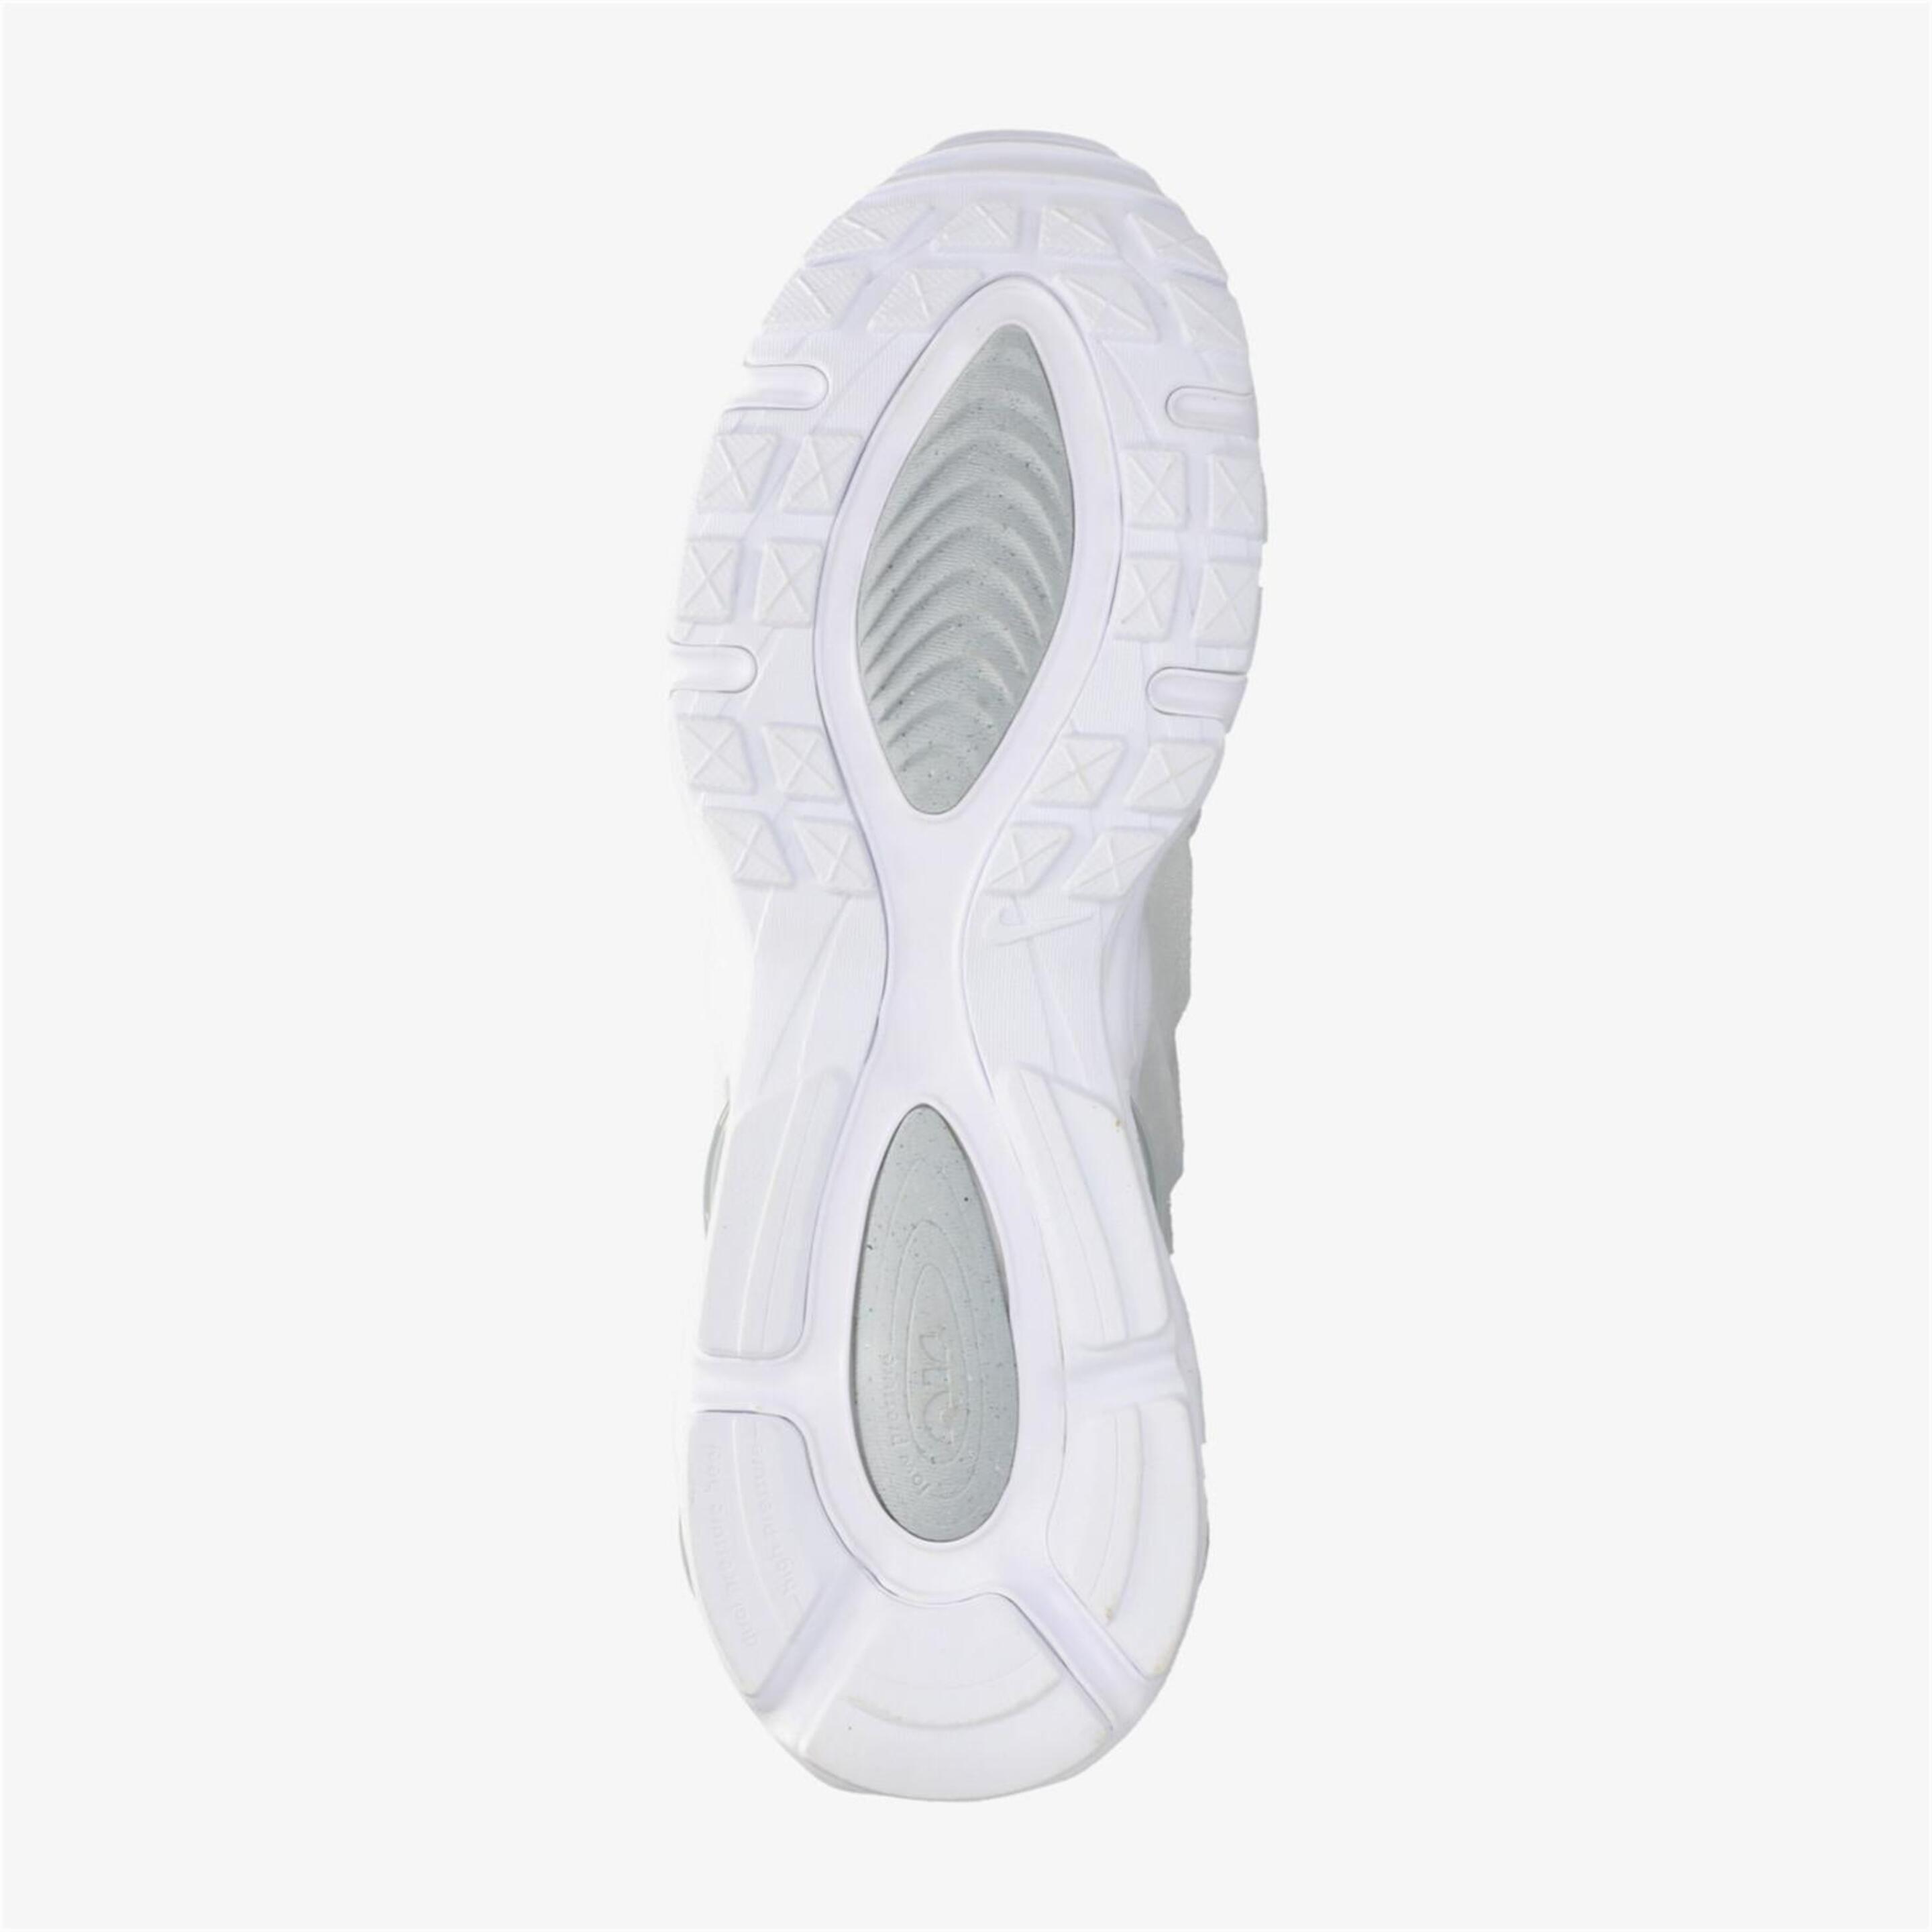 Nike Air Max Tw - Blanco - Zapatillas Hombre  | Sprinter